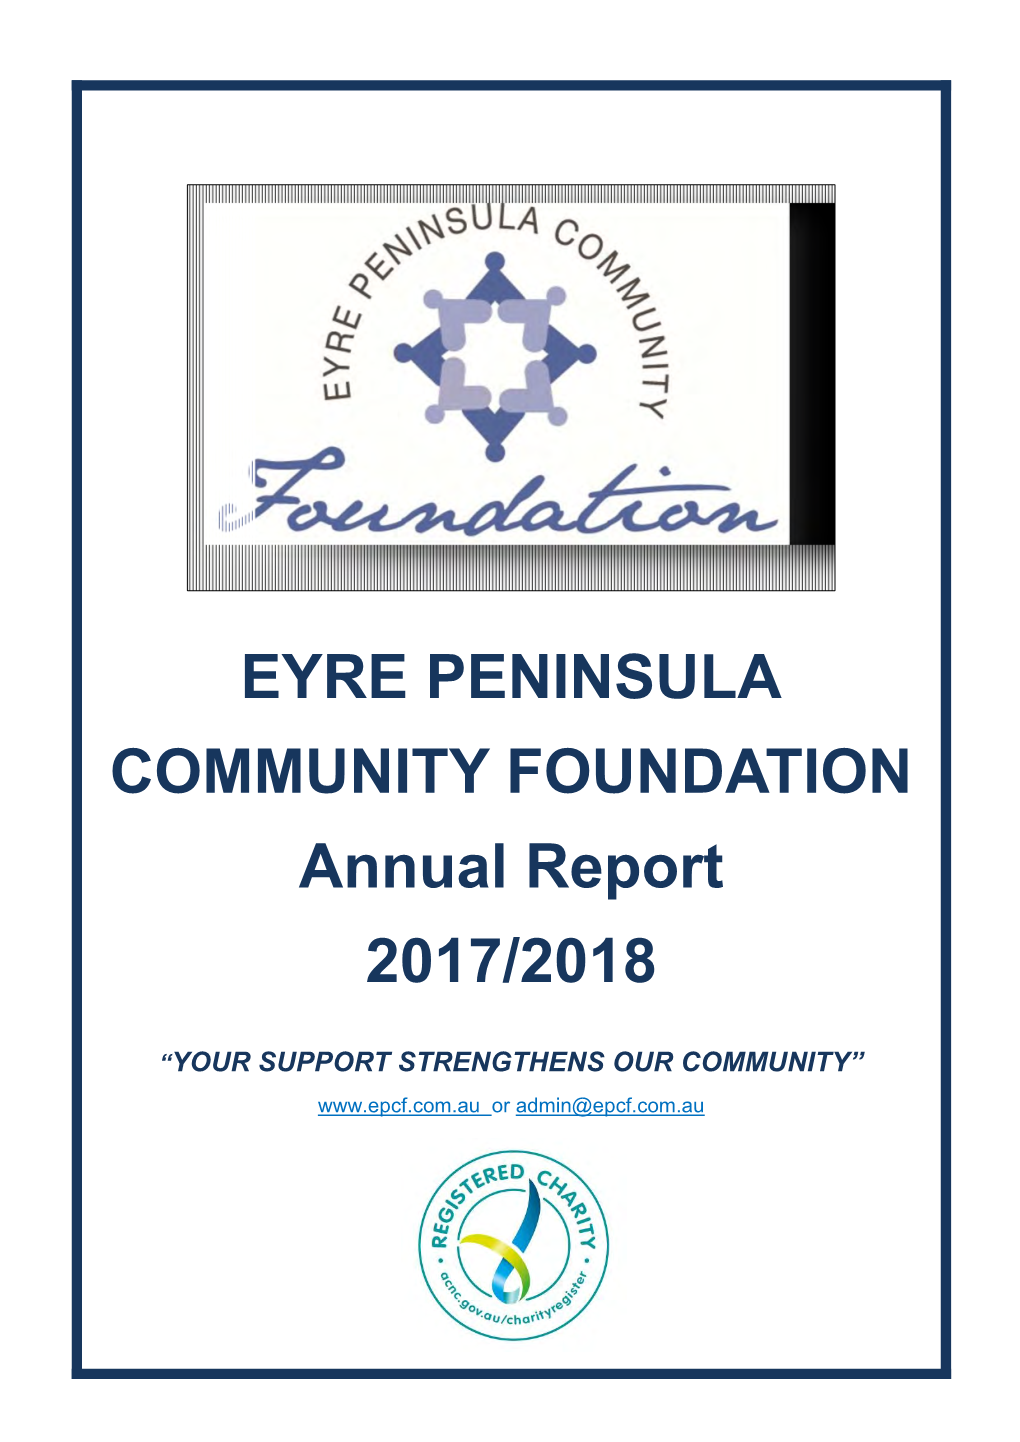 EYRE PENINSULA COMMUNITY FOUNDATION Annual Report 2017